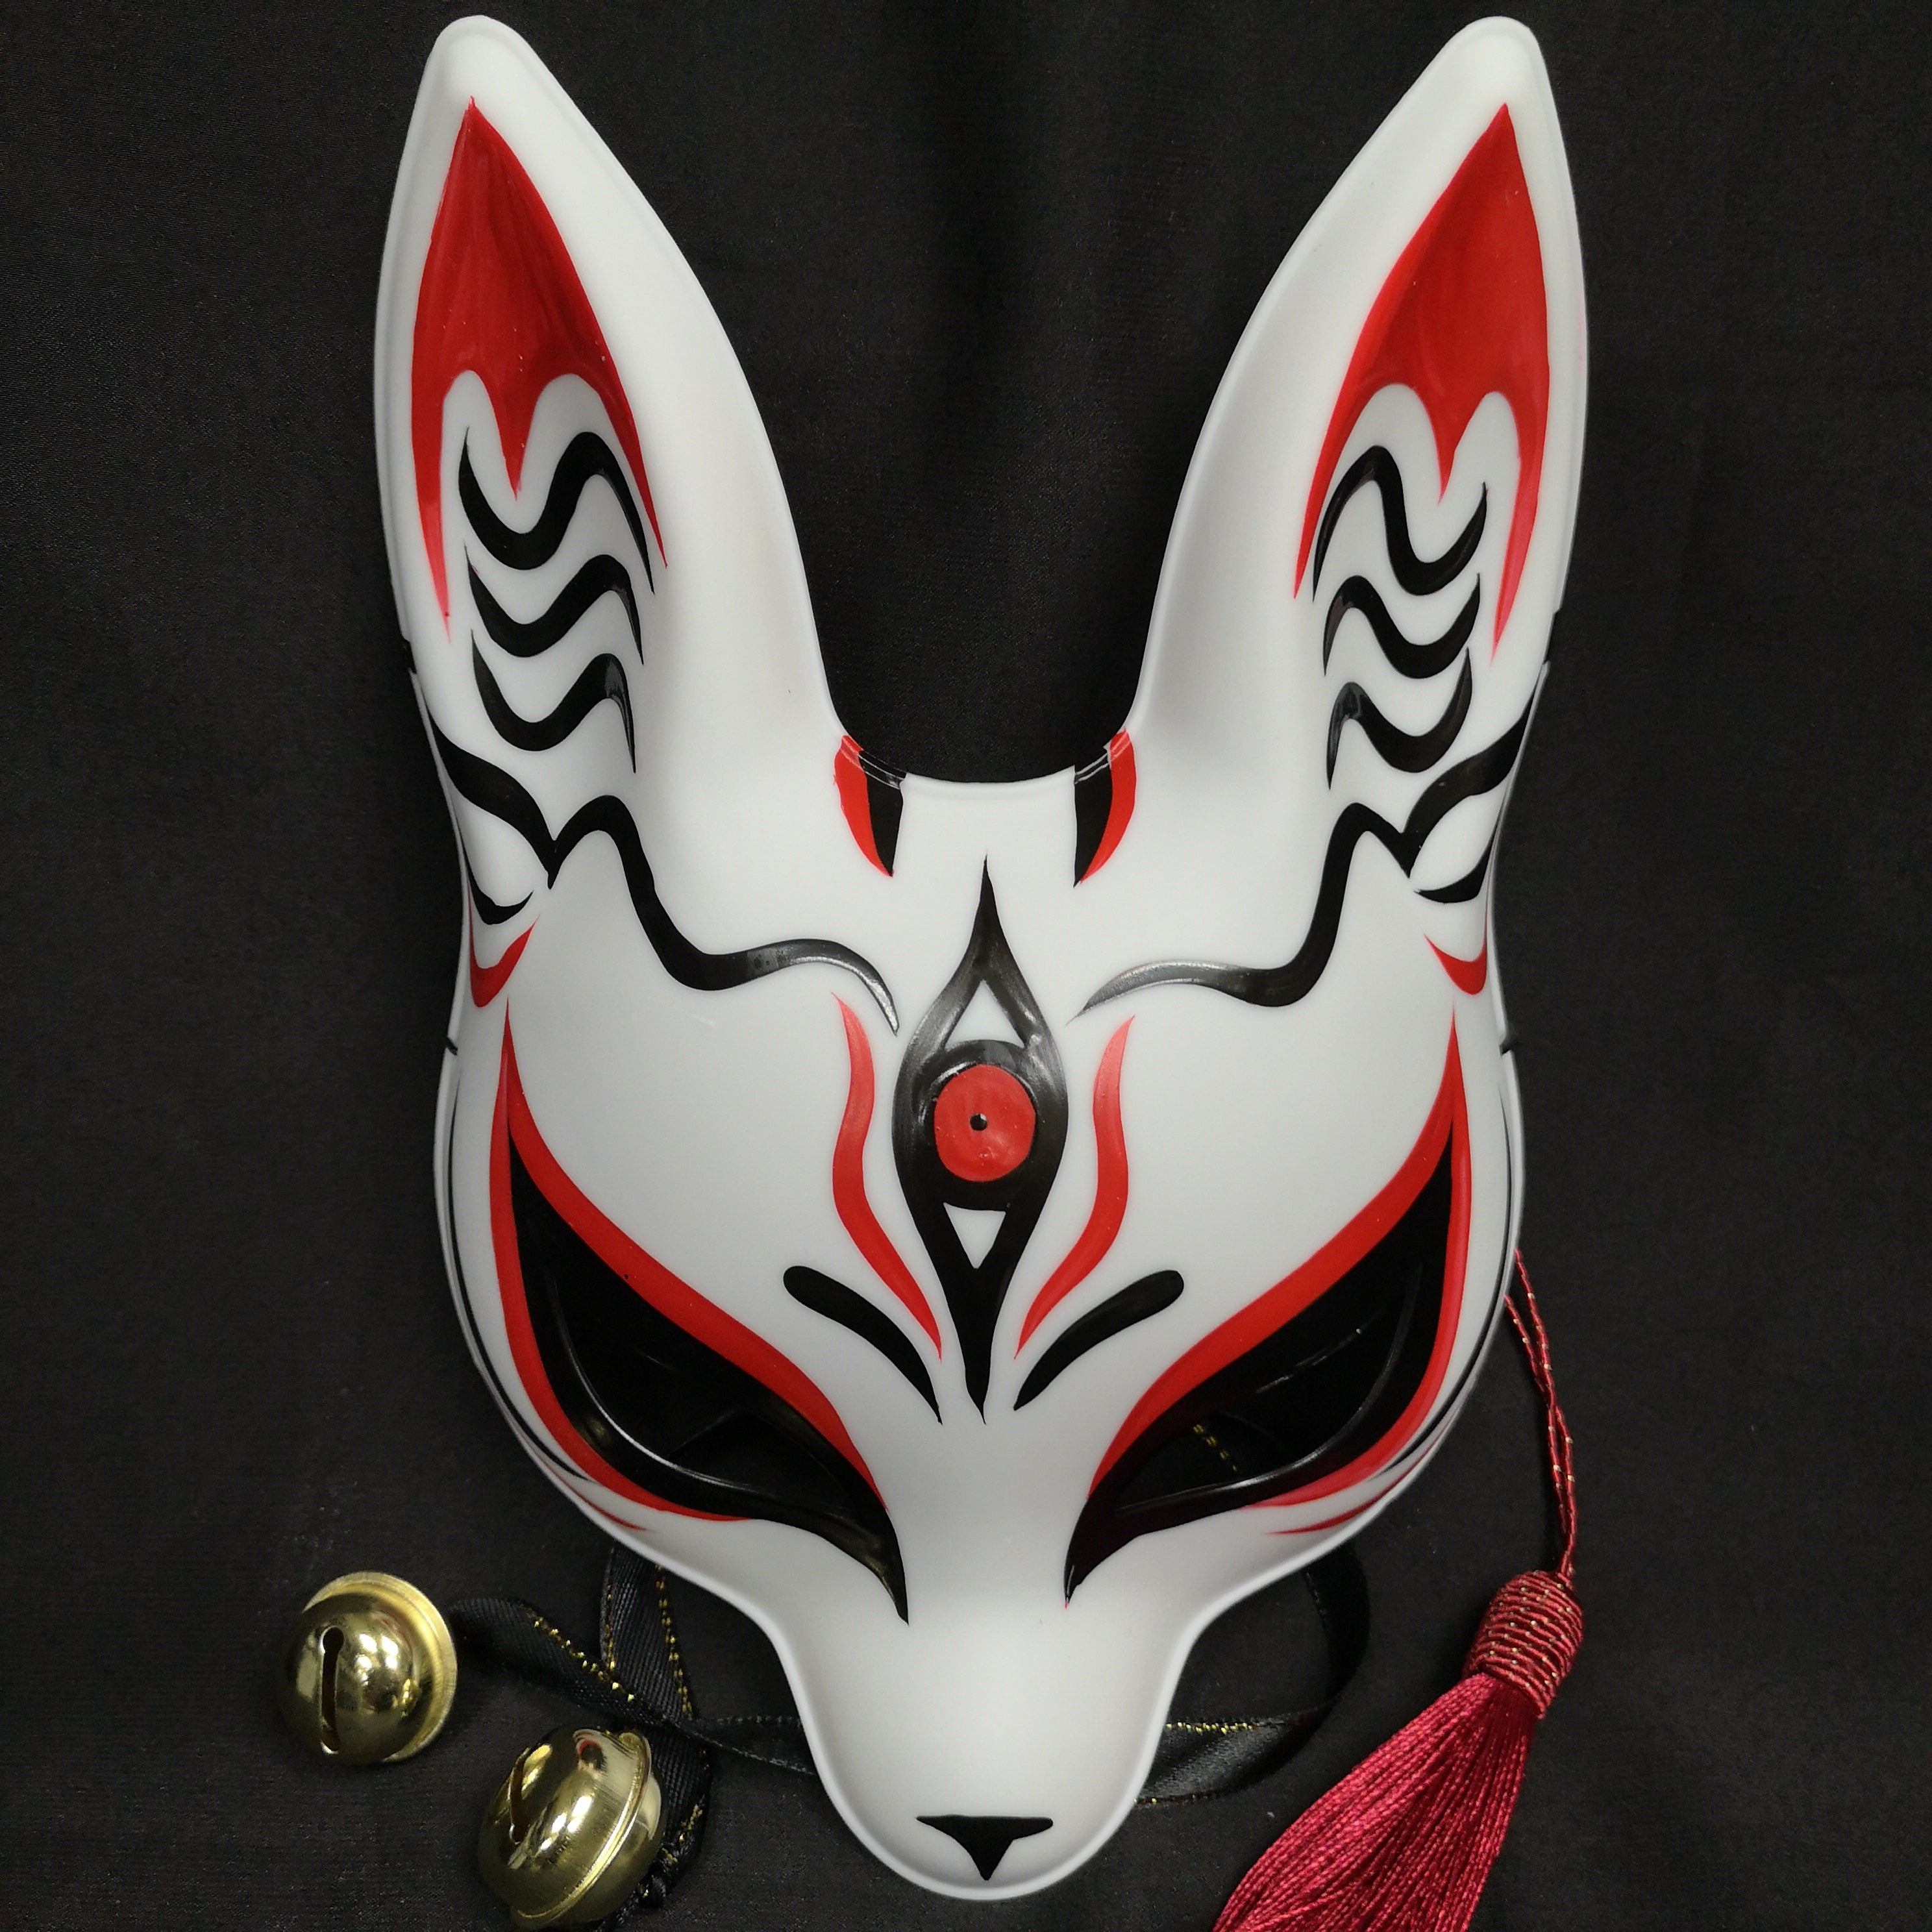 Kitsune Mask - Lunar Eclipse | Foxtume Red / Blue